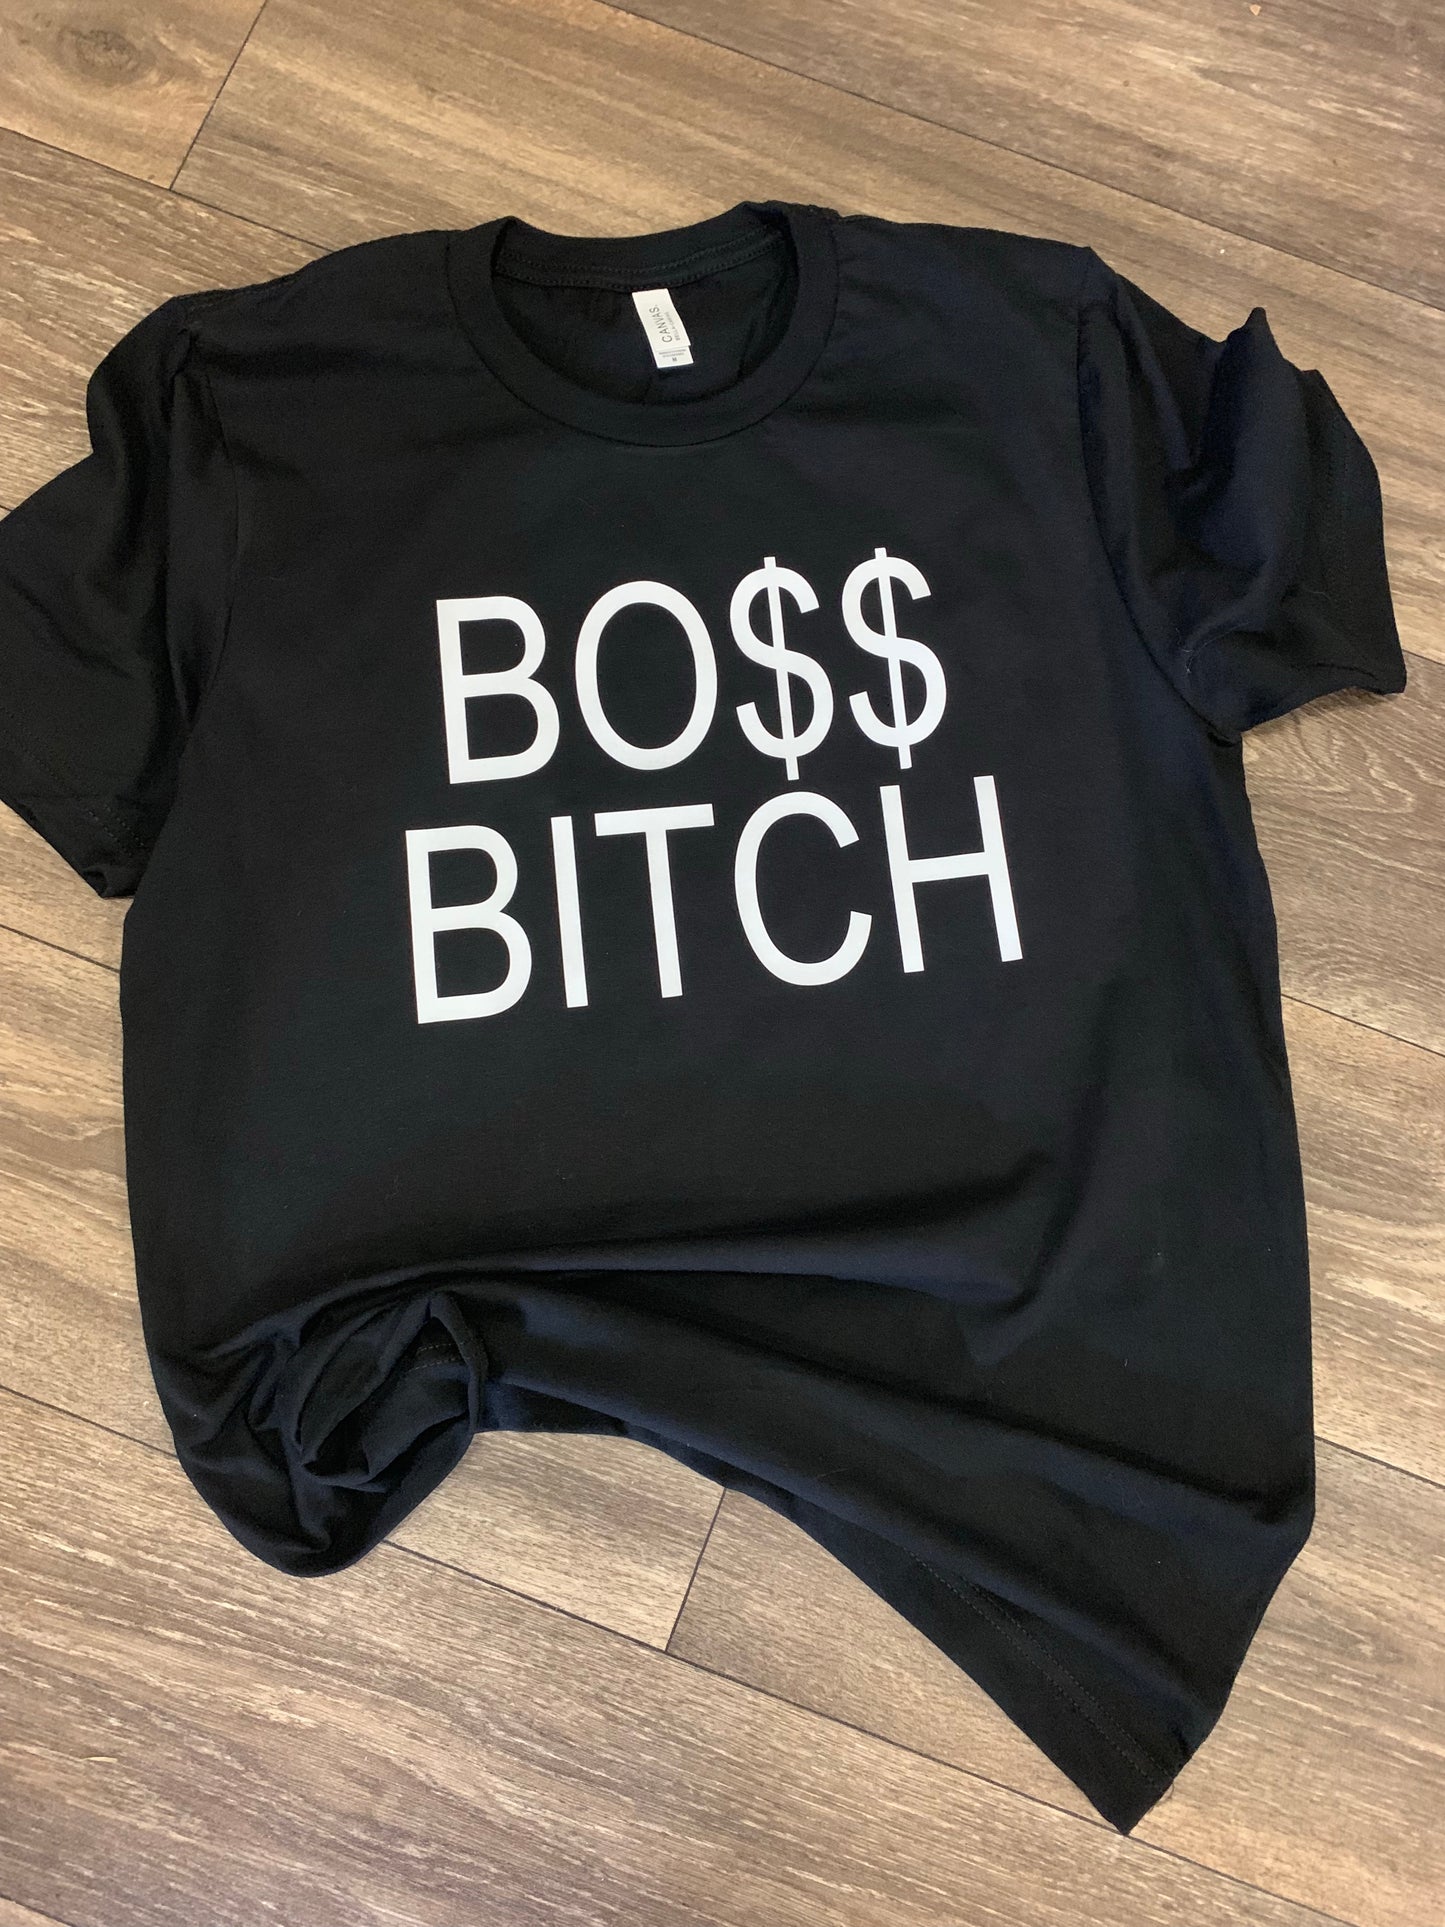 Boss bitch tee